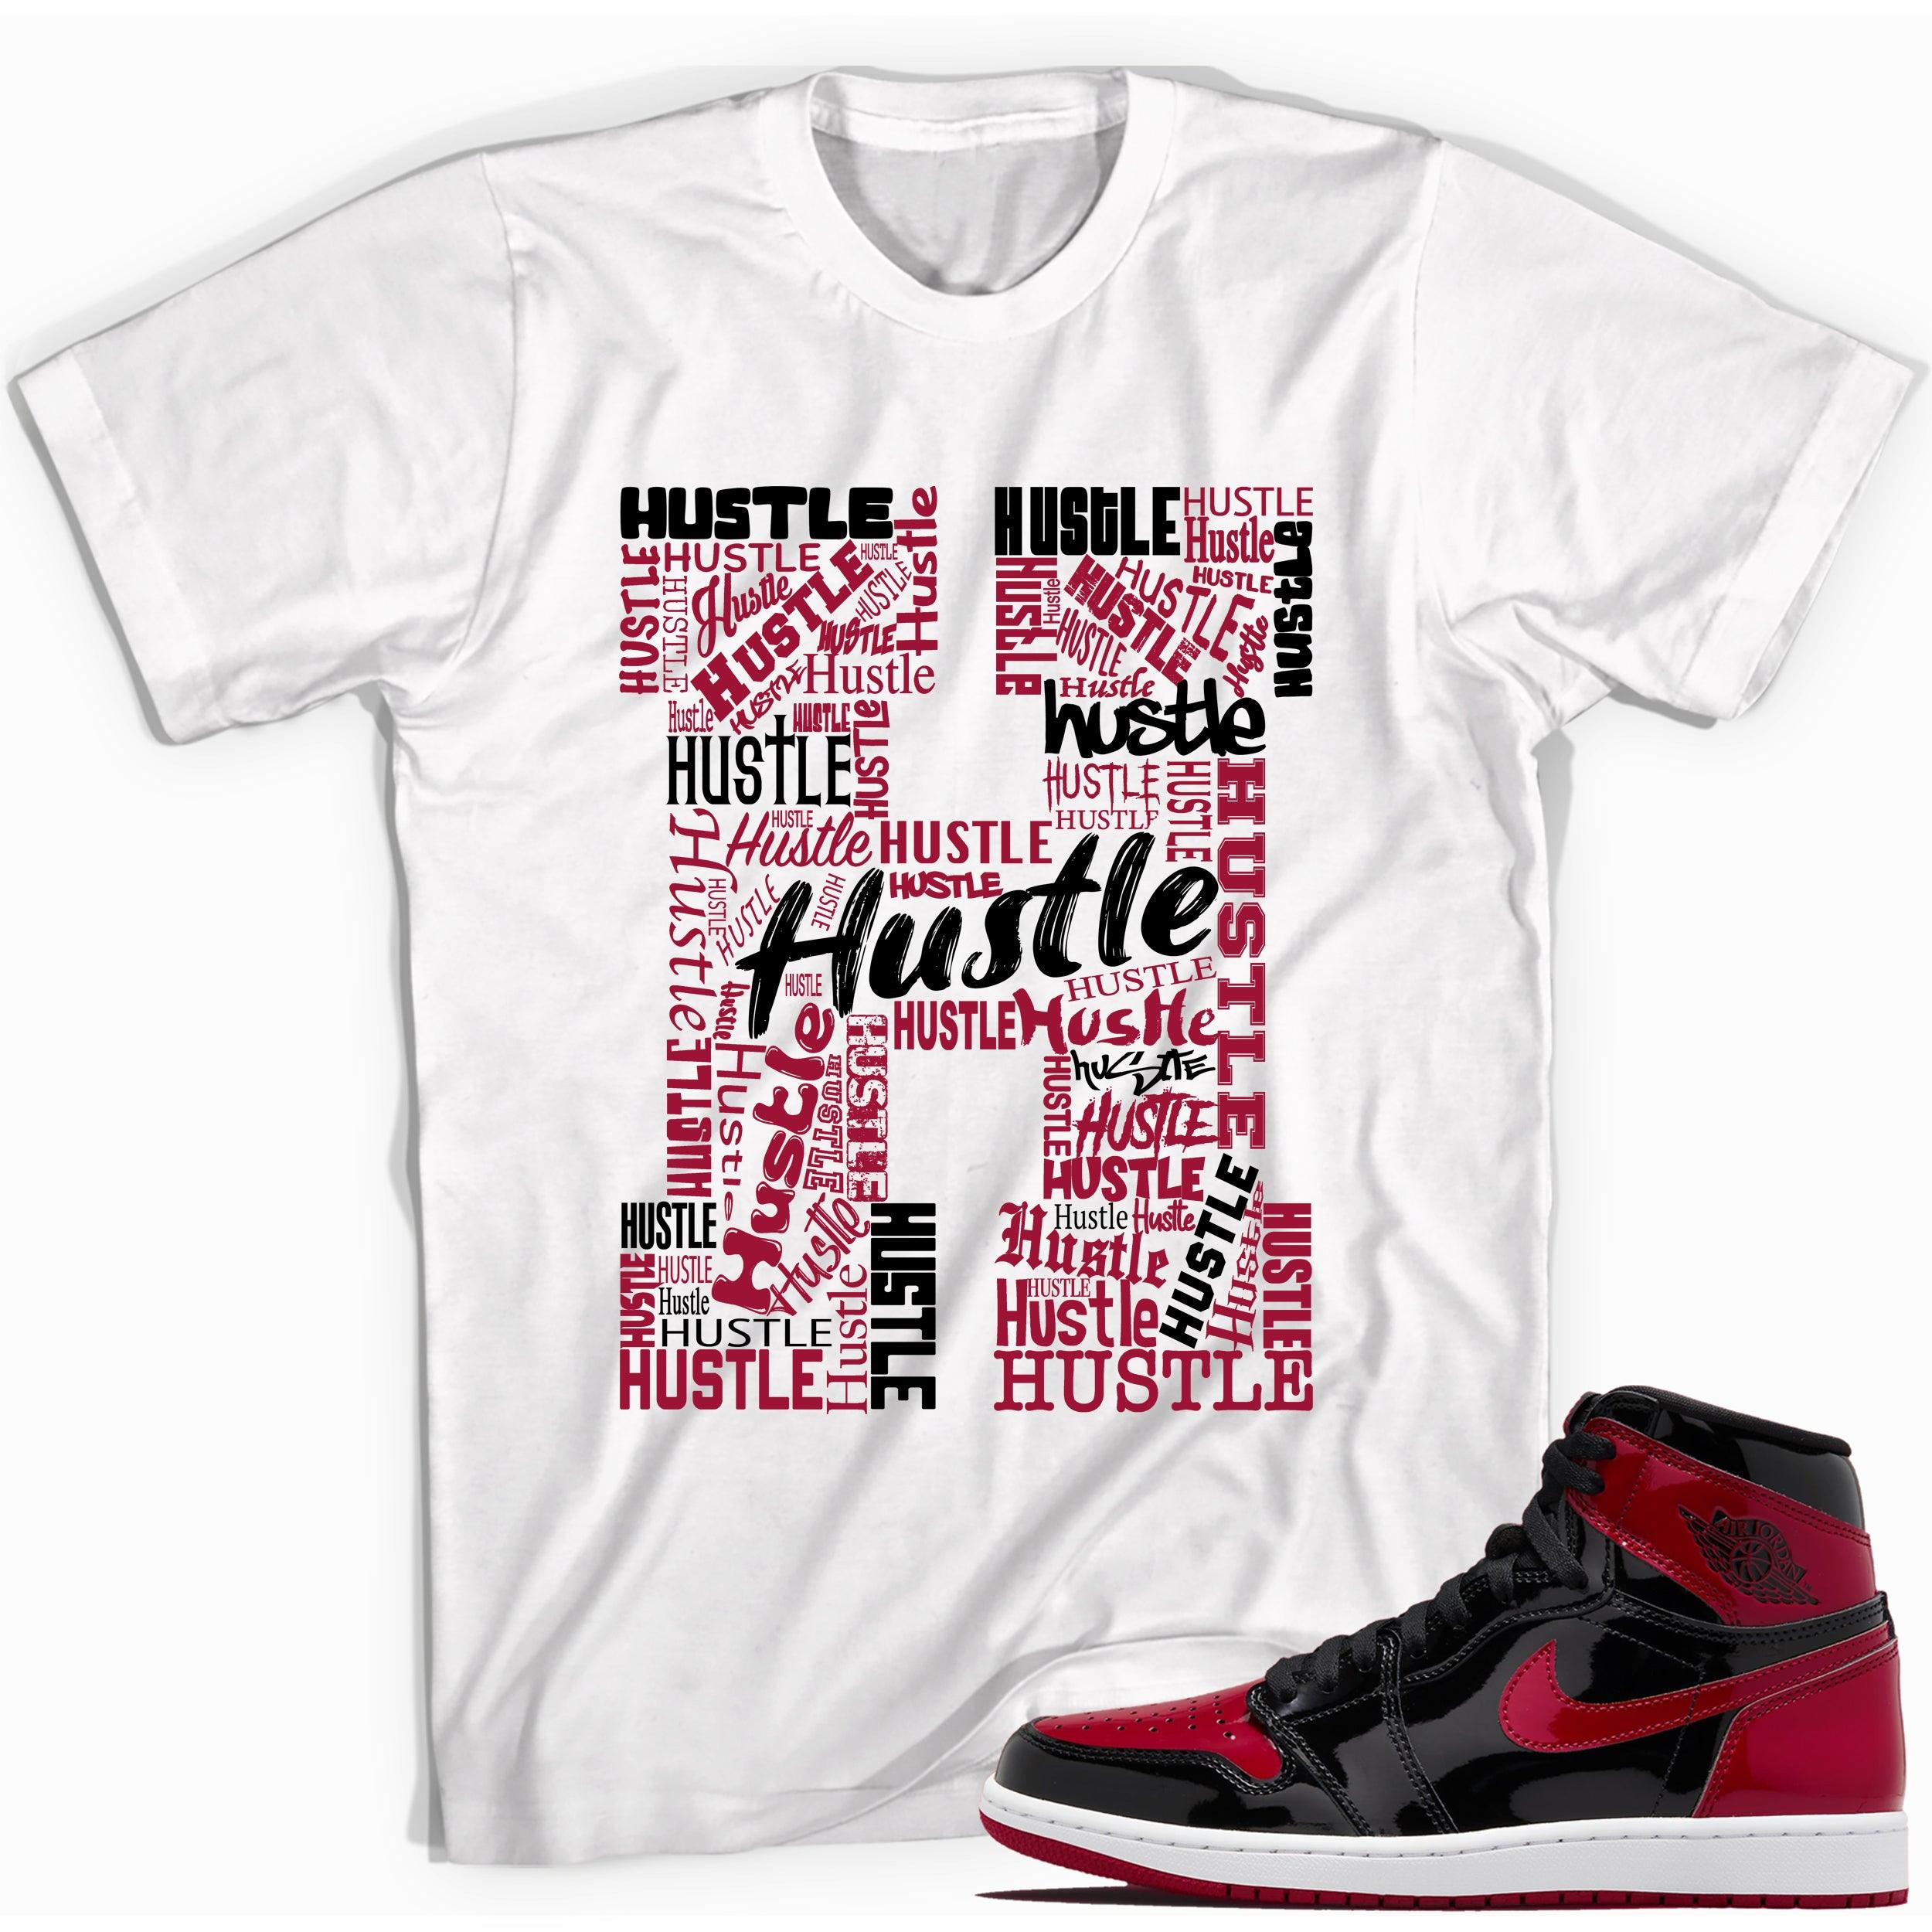 H Is For Hustle Shirt for Jordan 1s Retro Bred Patent photo